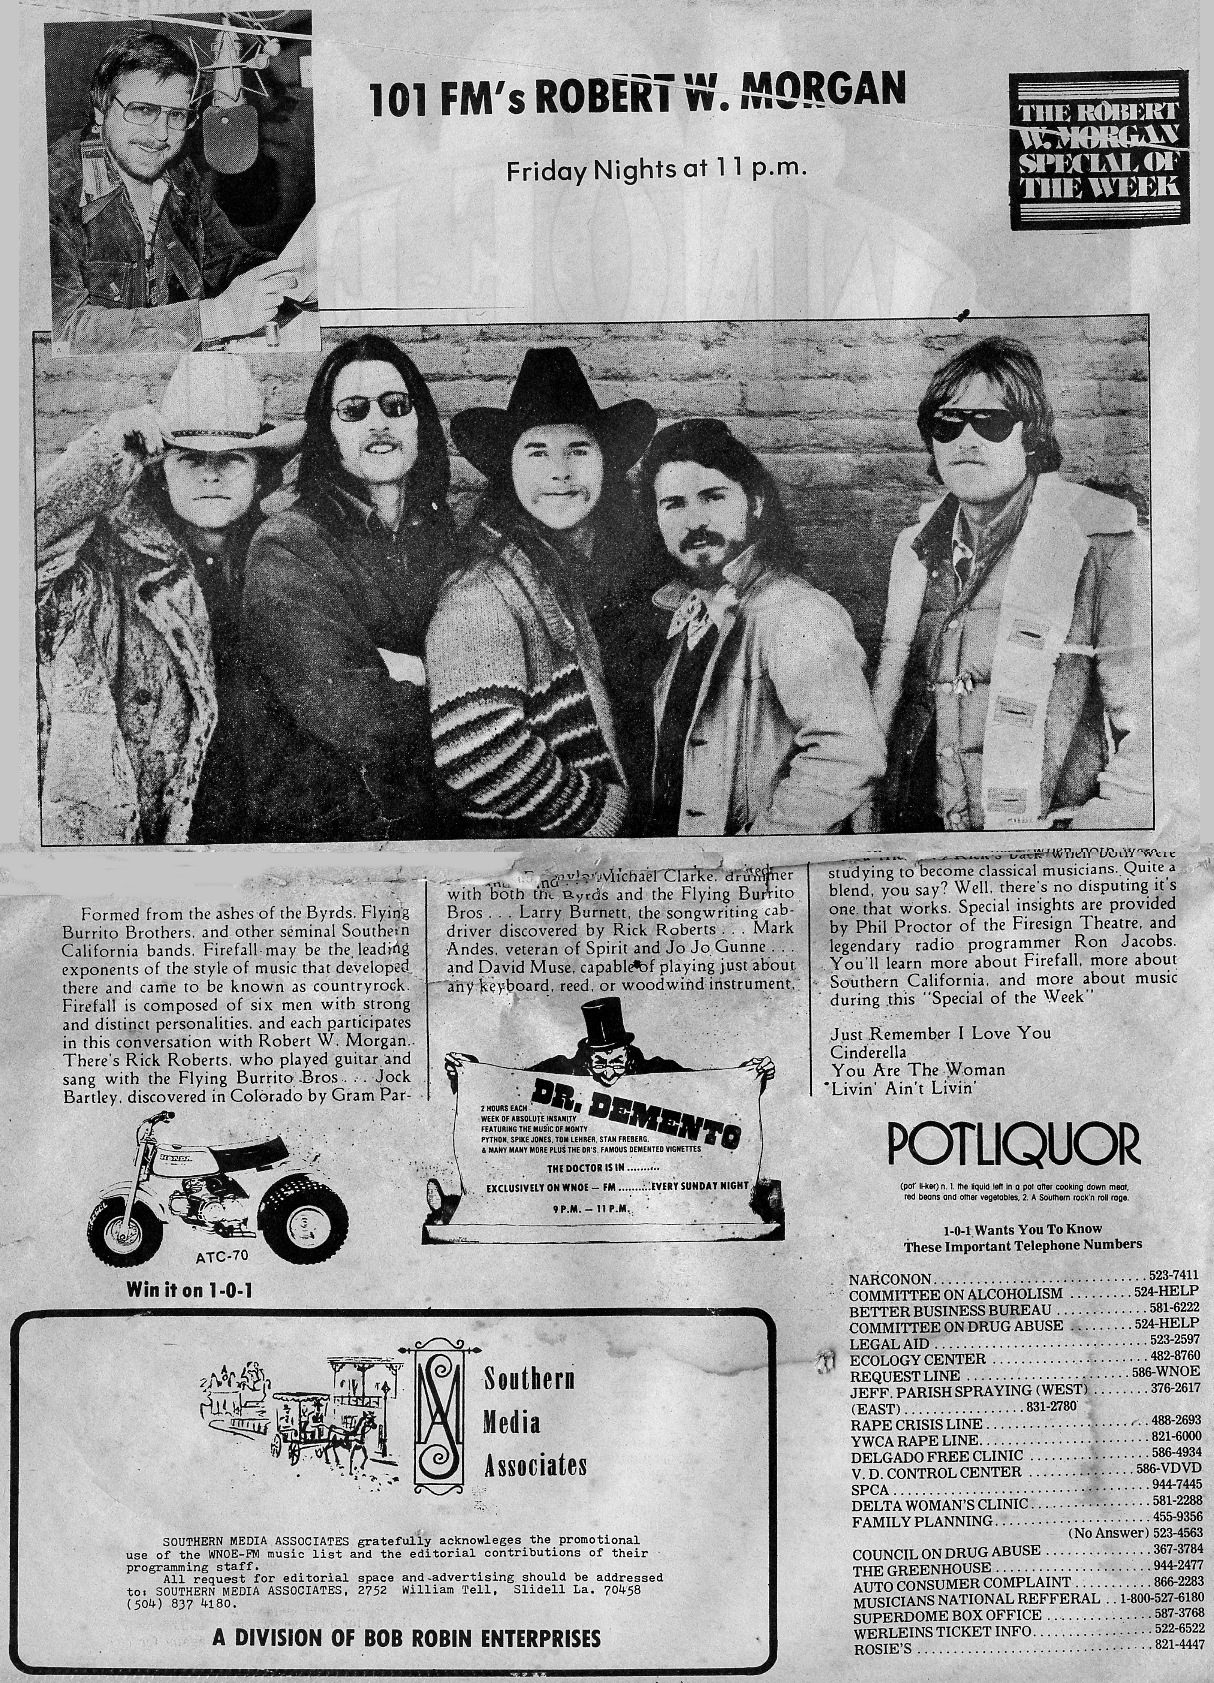 WNOE-FM Music Chart 5/5/78